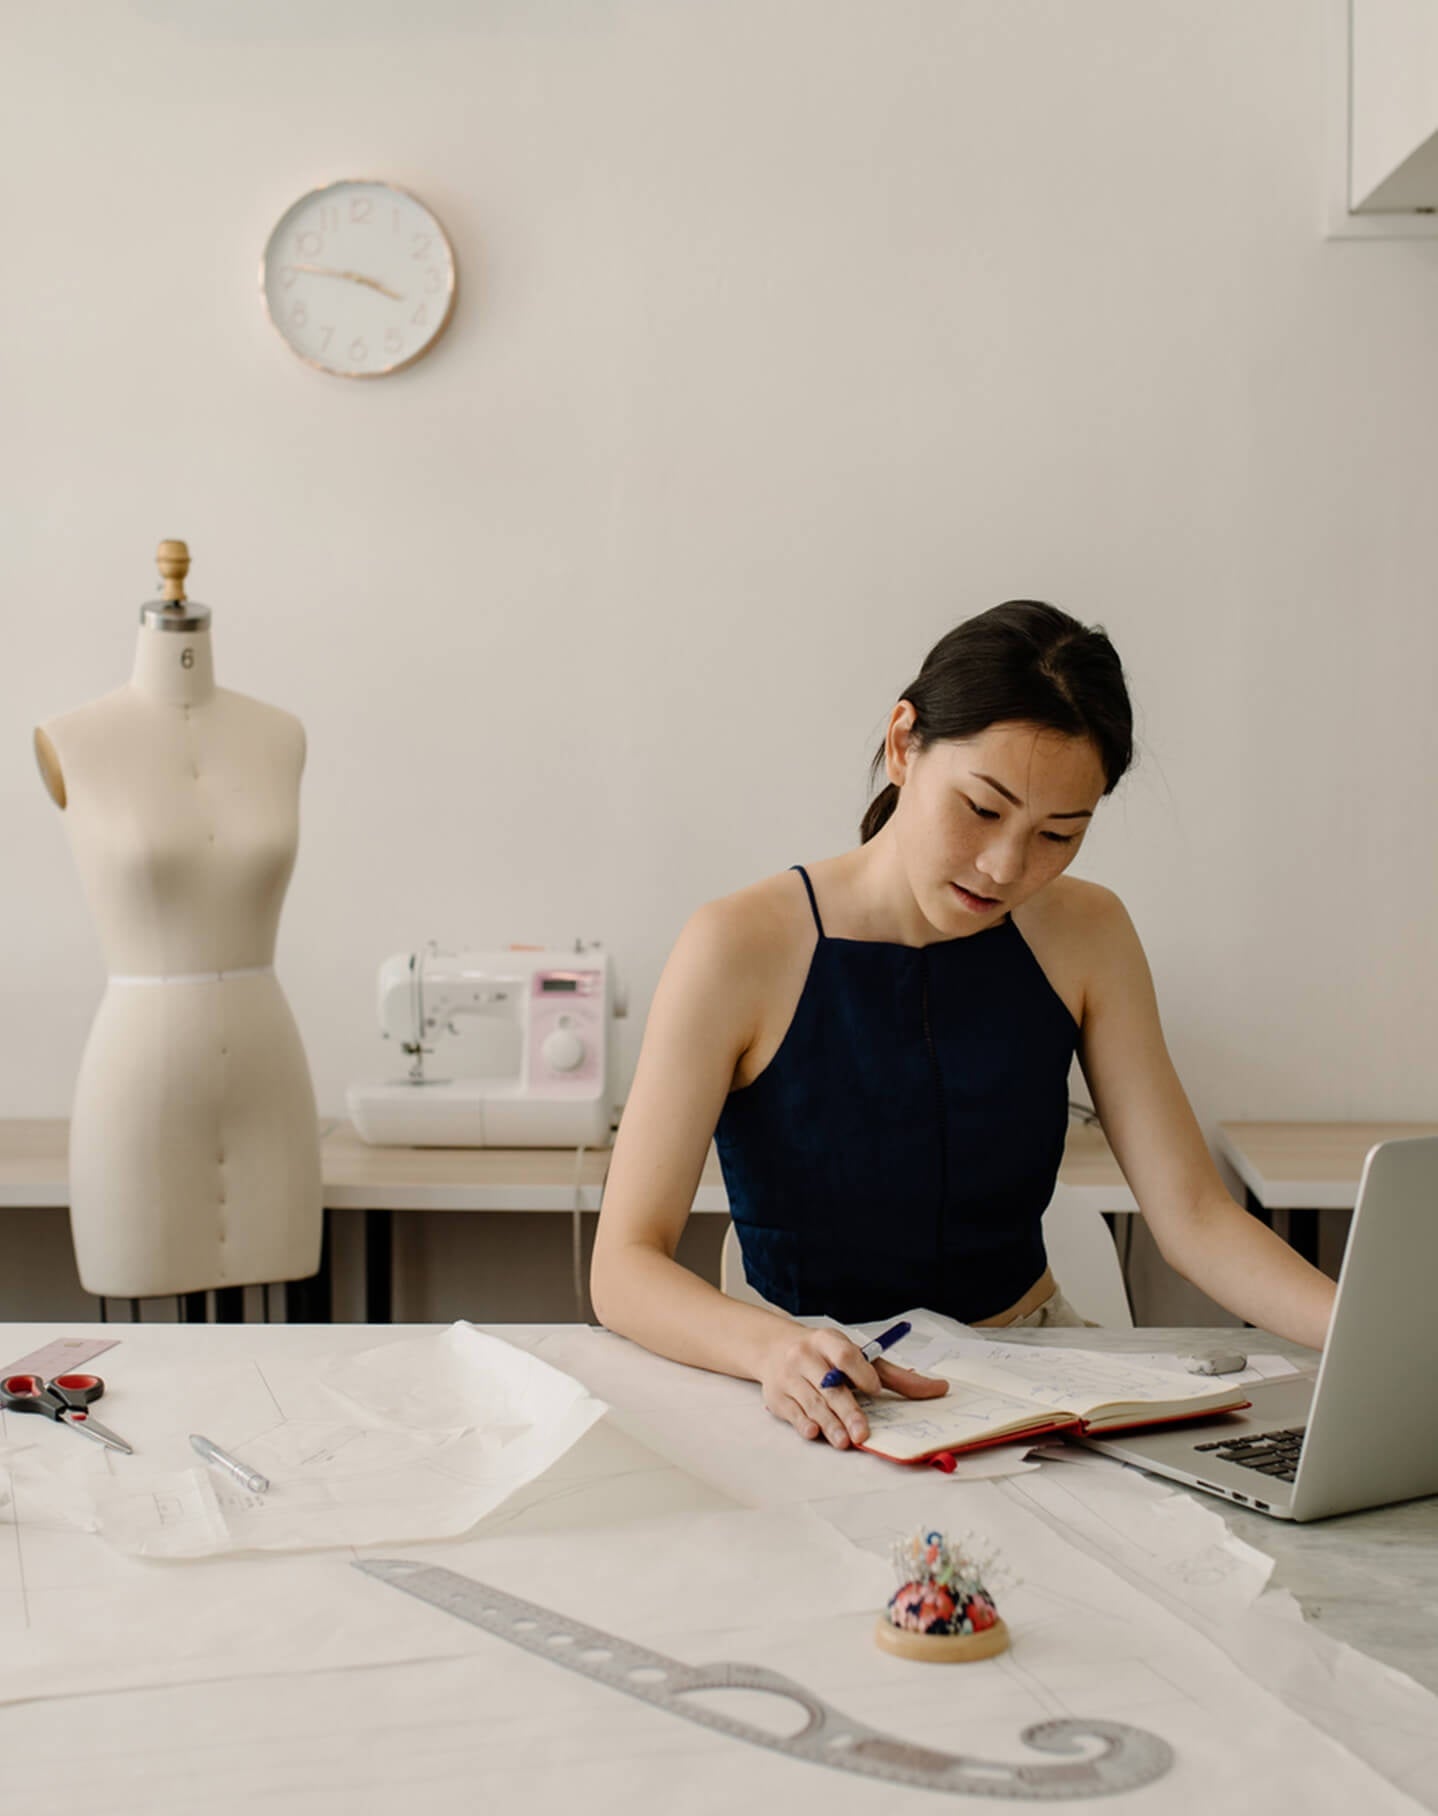 A fashion student works on her online portfolio